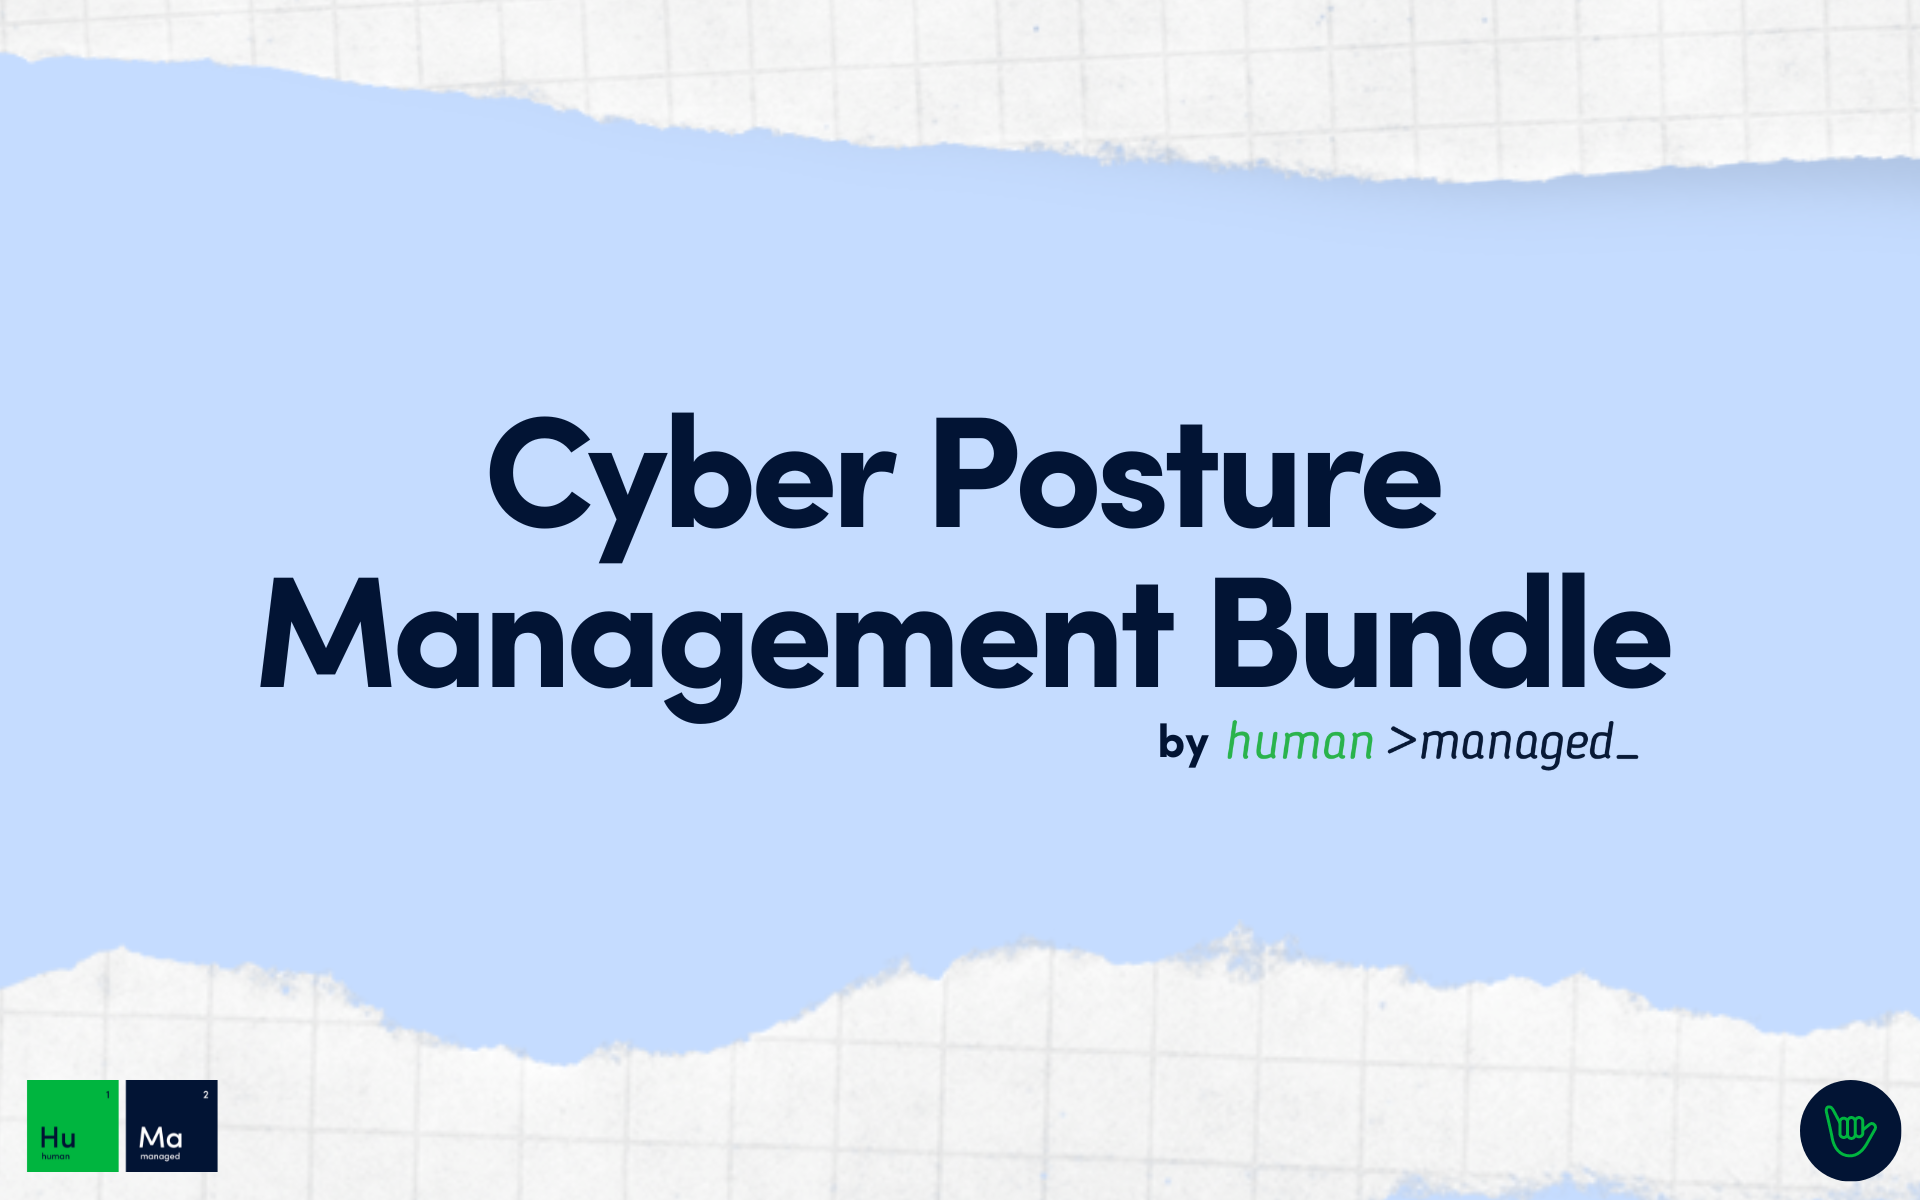 Cyber Posture Management Bundle Release